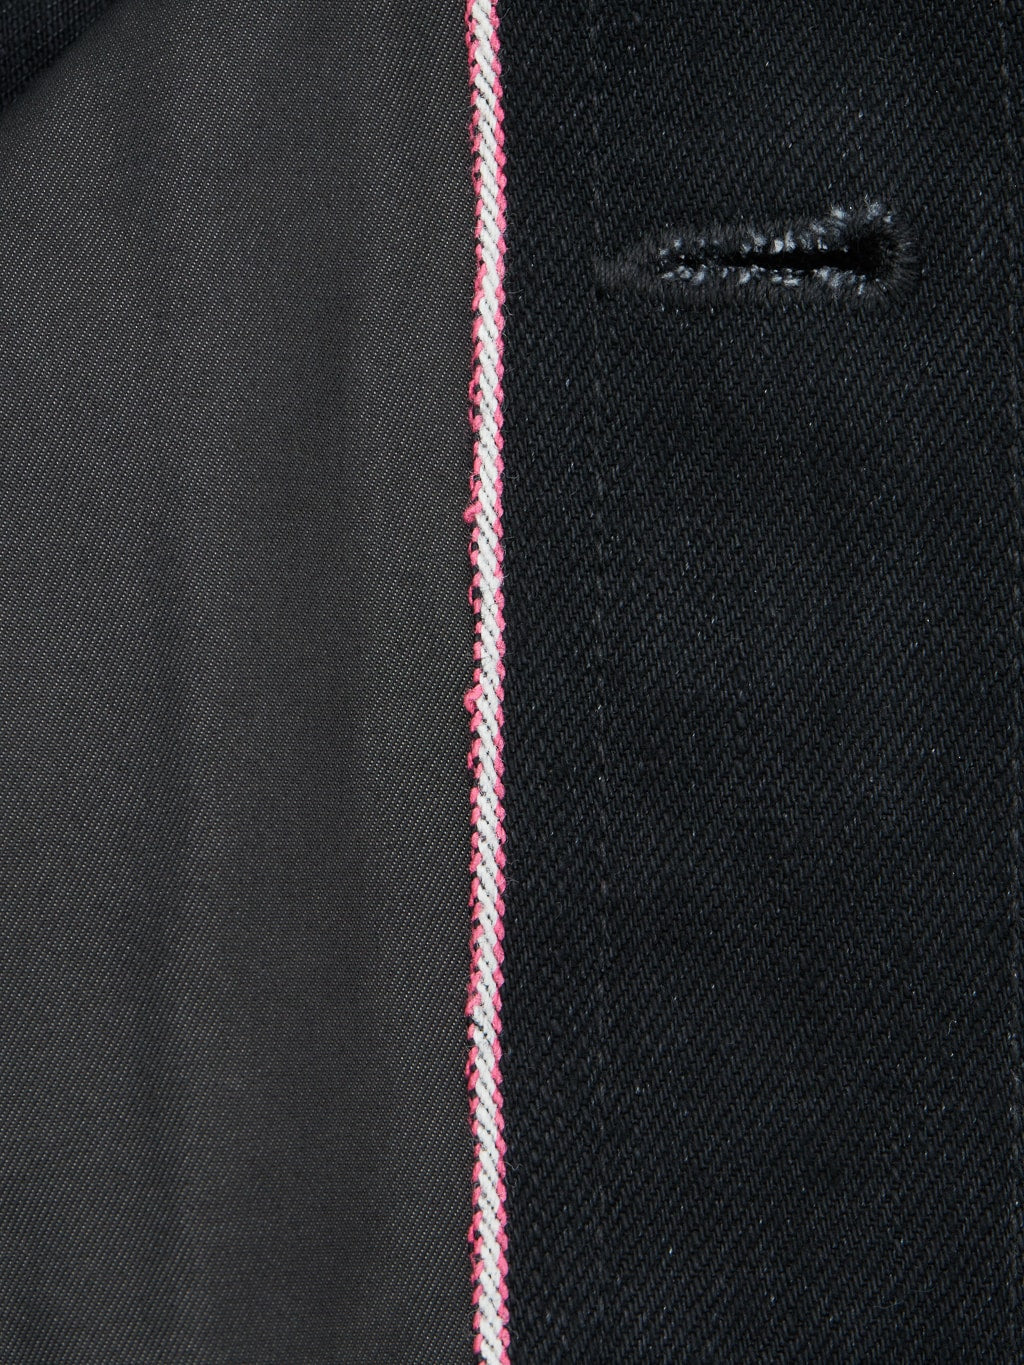 Momotaro MXGJ1108 Black x Black Type II Jacket selvedge